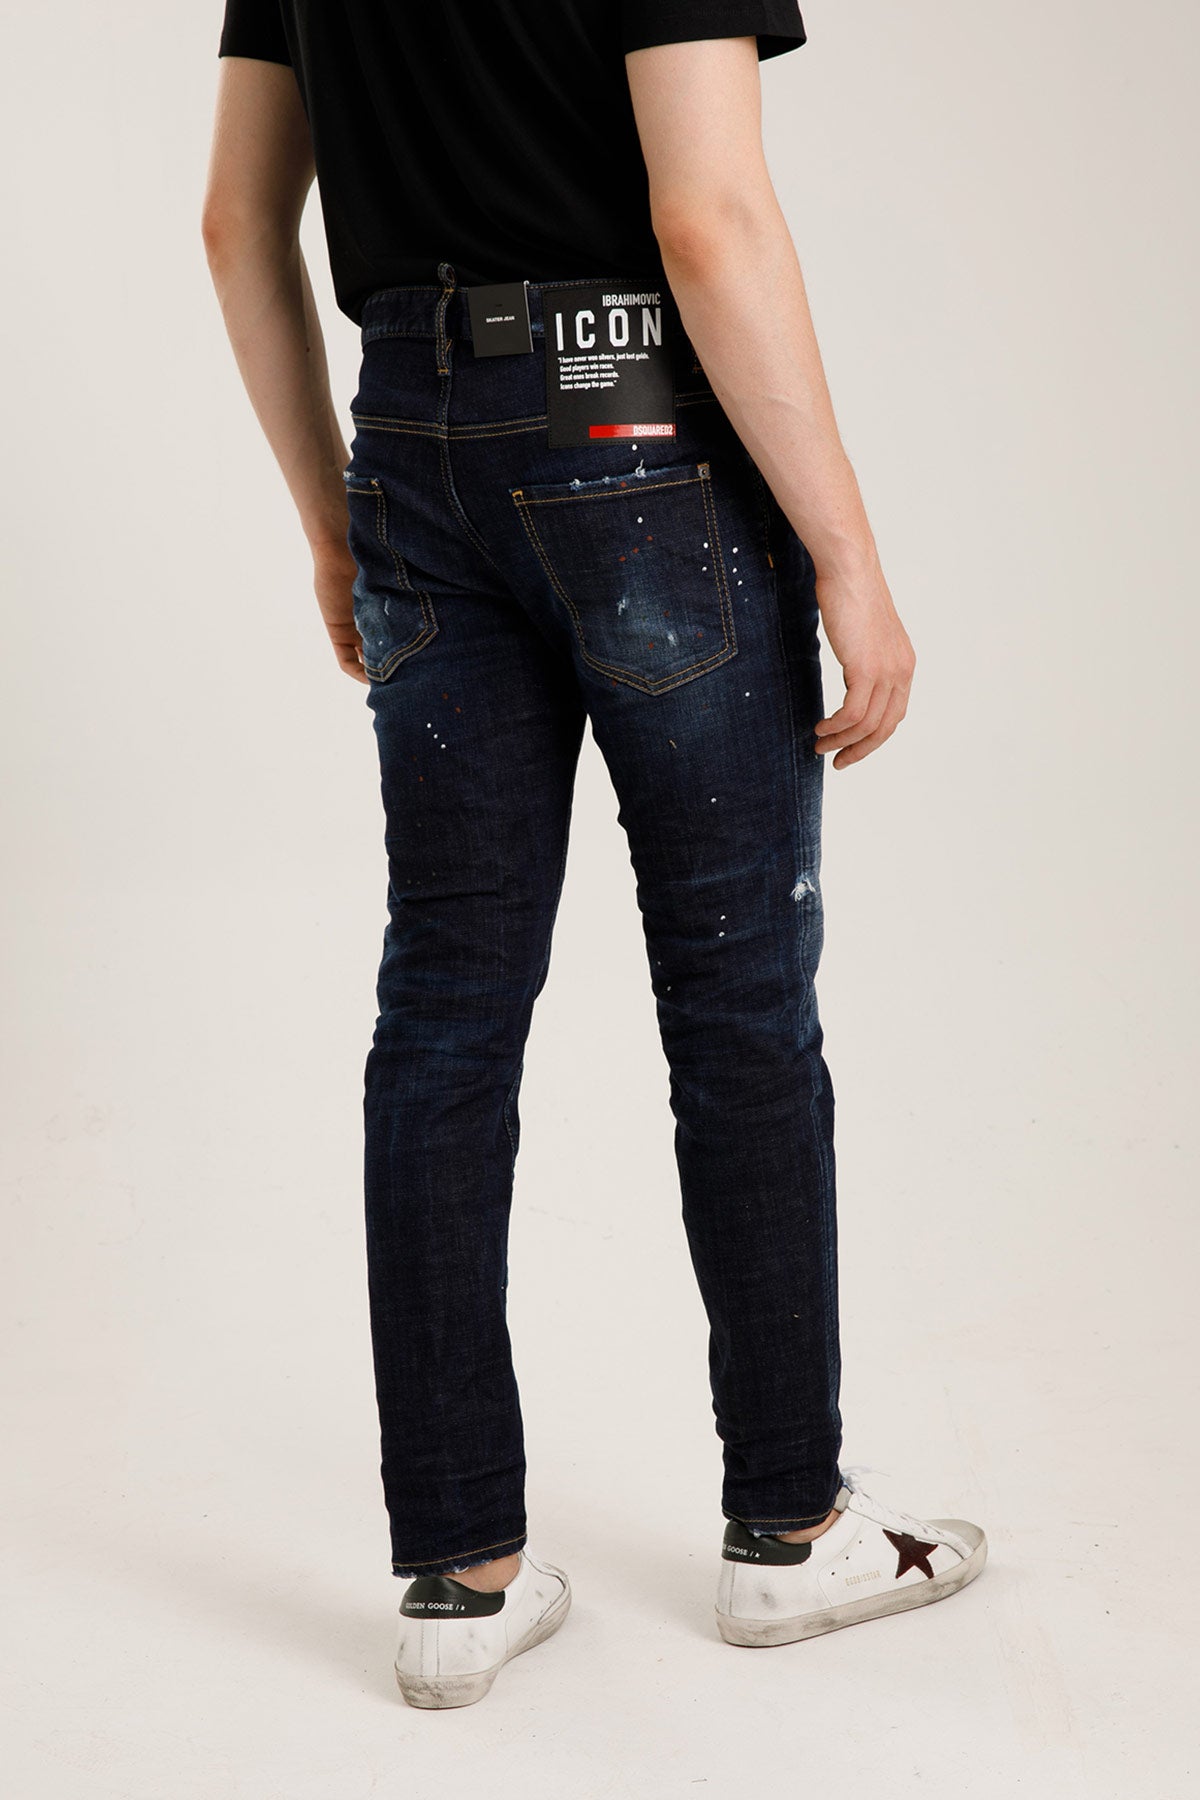 Dsquared Ibrahimovic Icon Skater Jeans-Libas Trendy Fashion Store